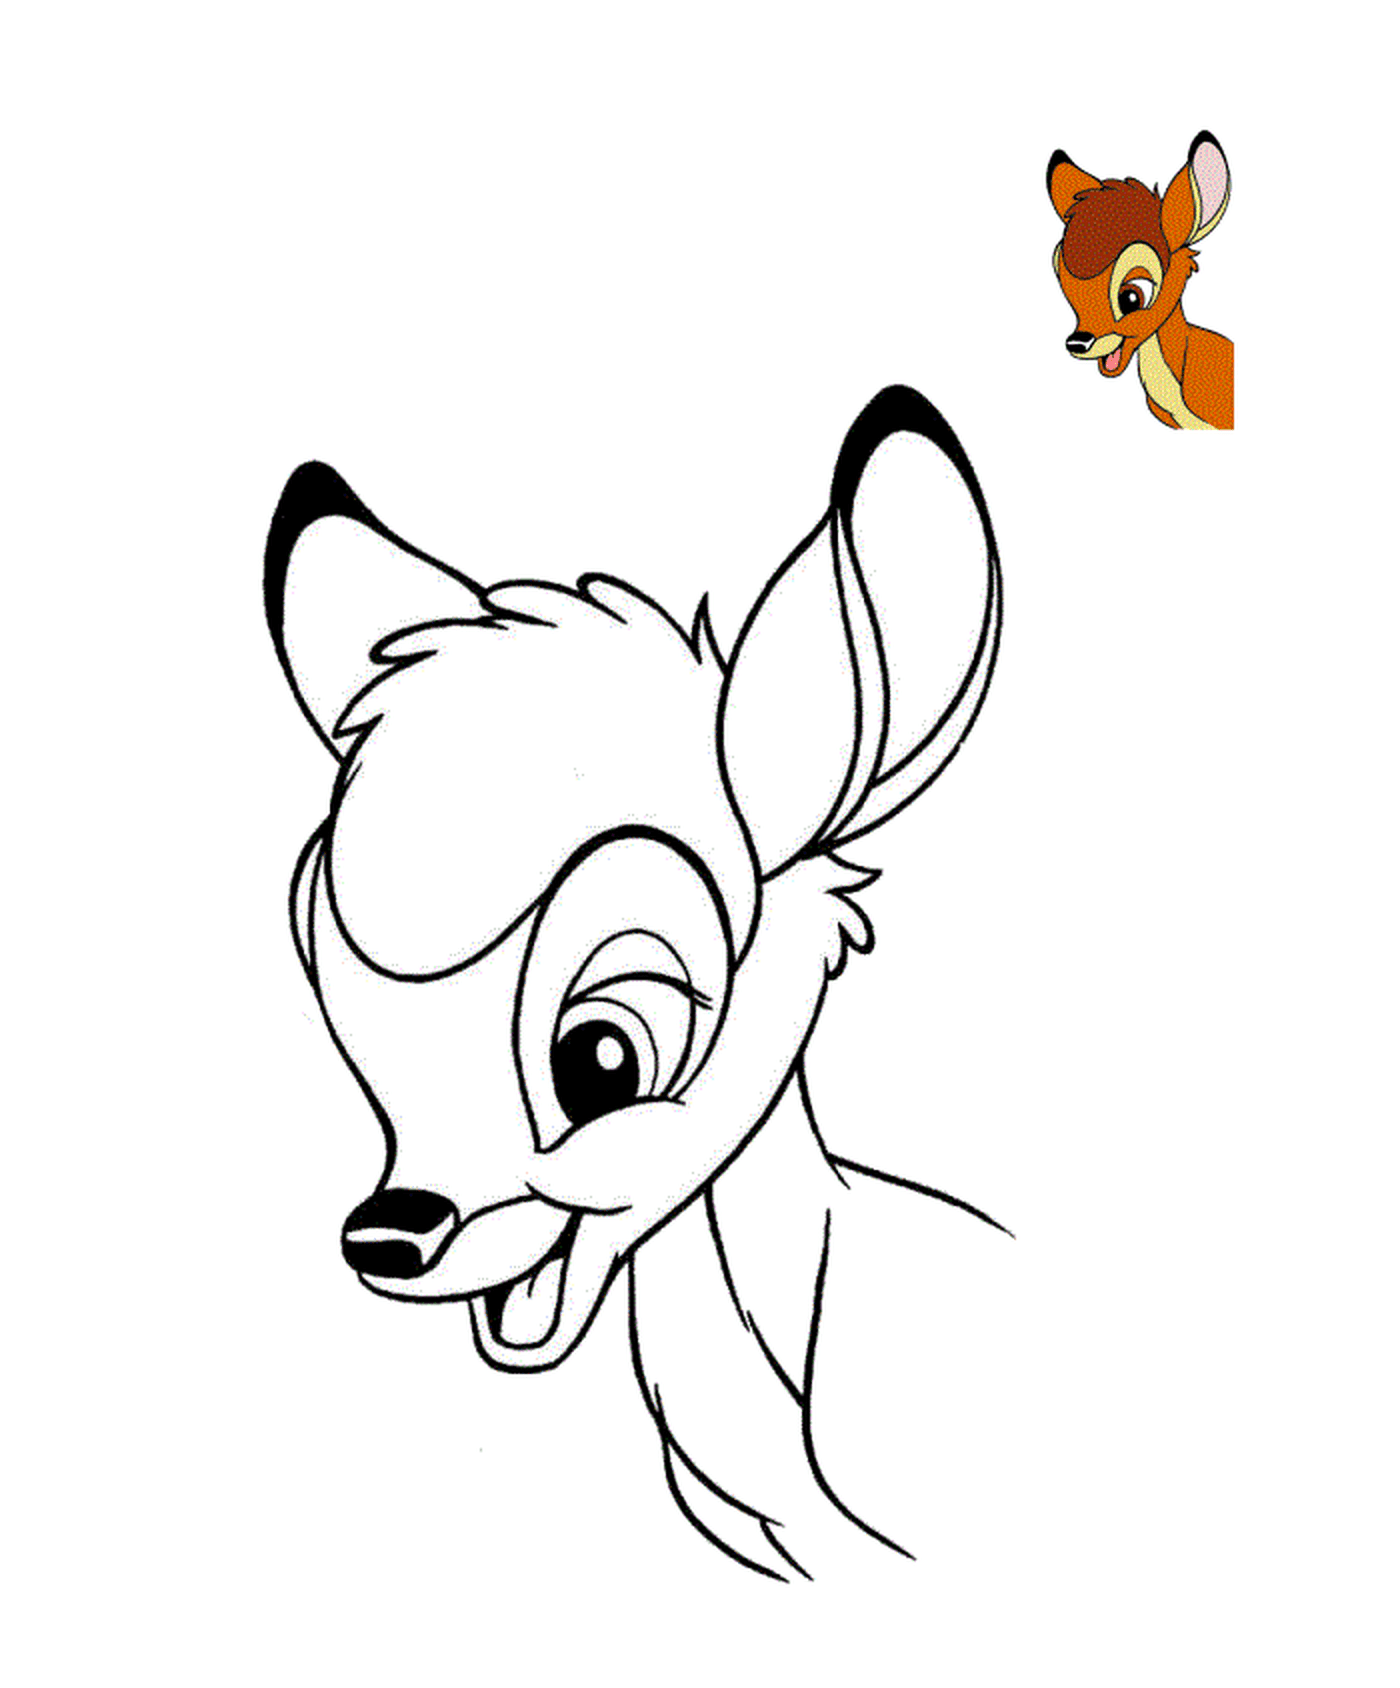  a young deer 